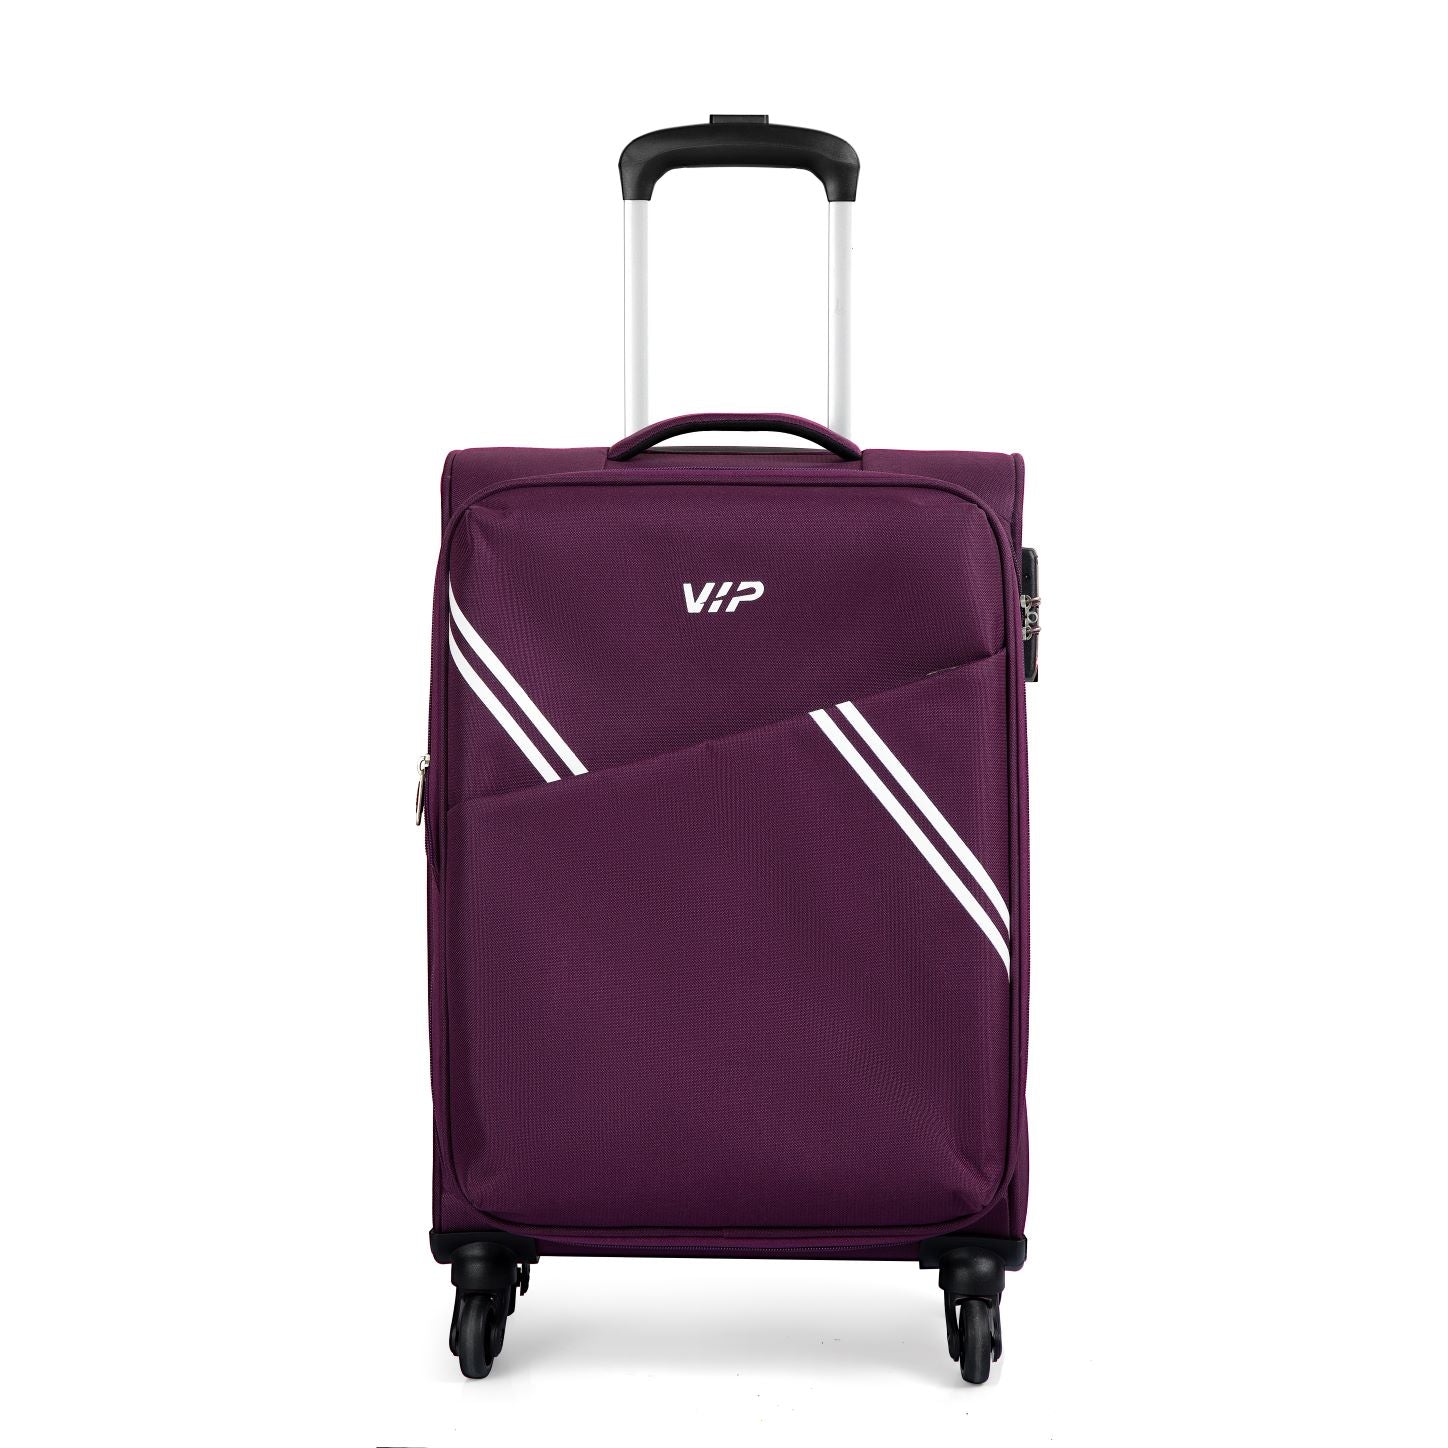 VIP Verona 59cm 4 Wheel Cabin Luggage Trolley Purple